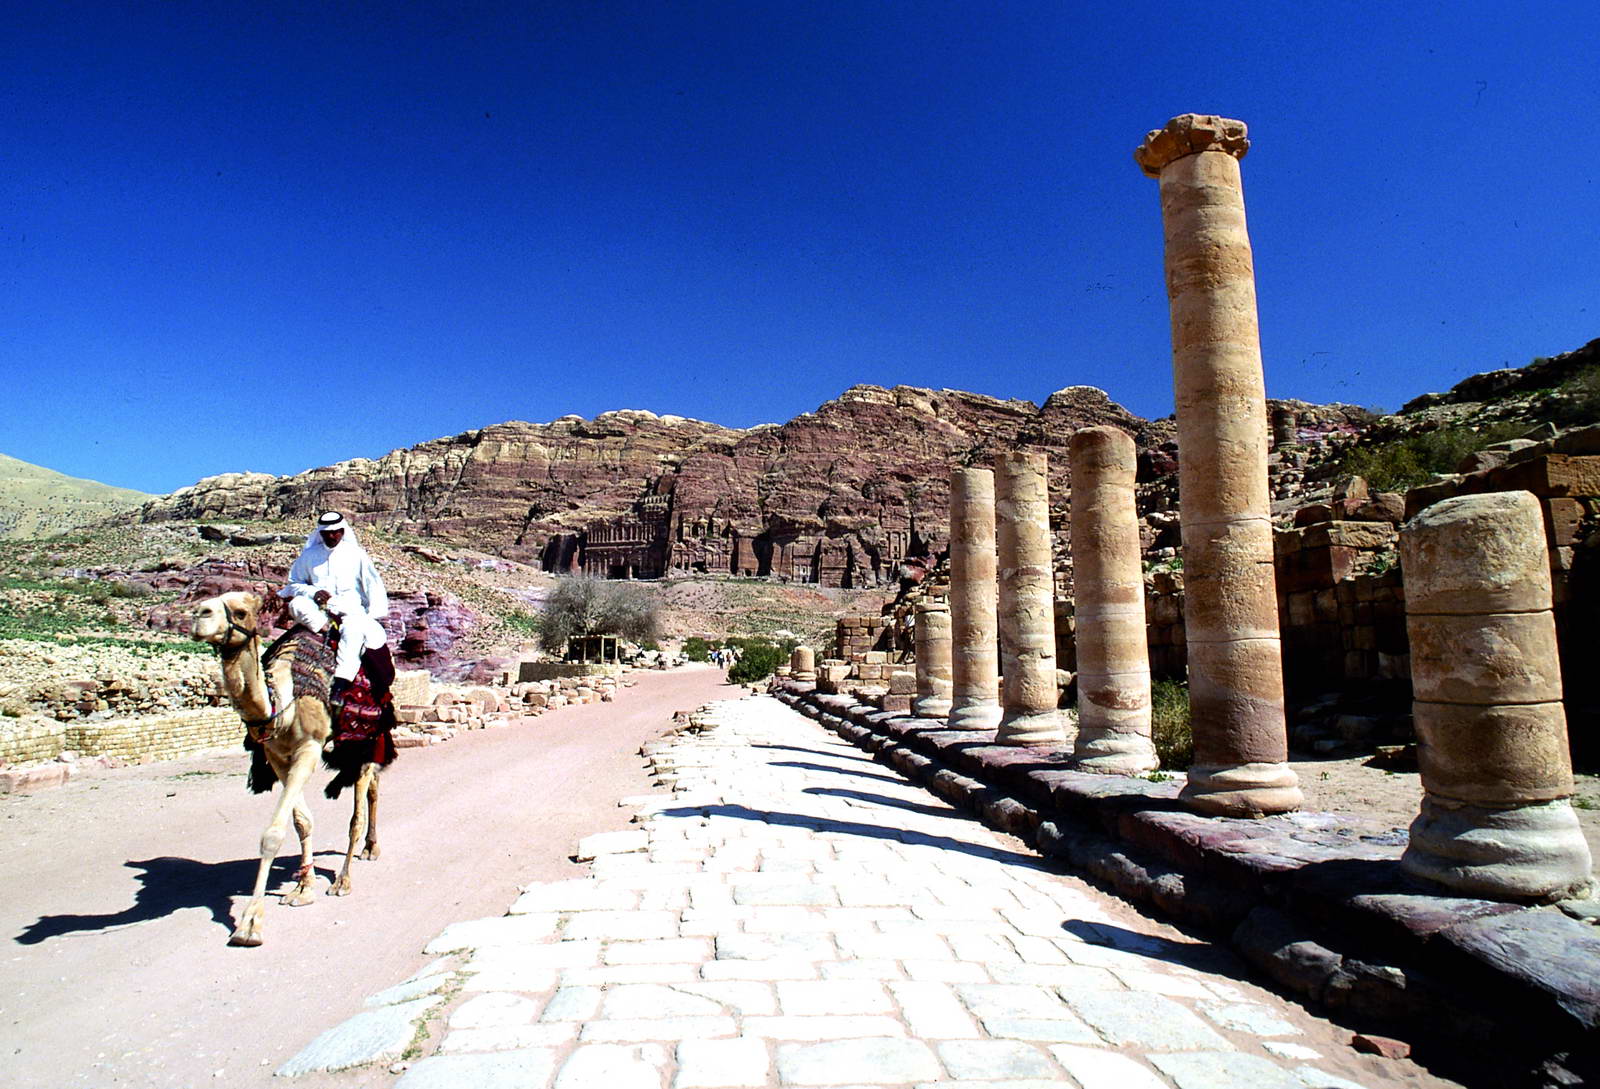 More Options for Travelers to Jordan